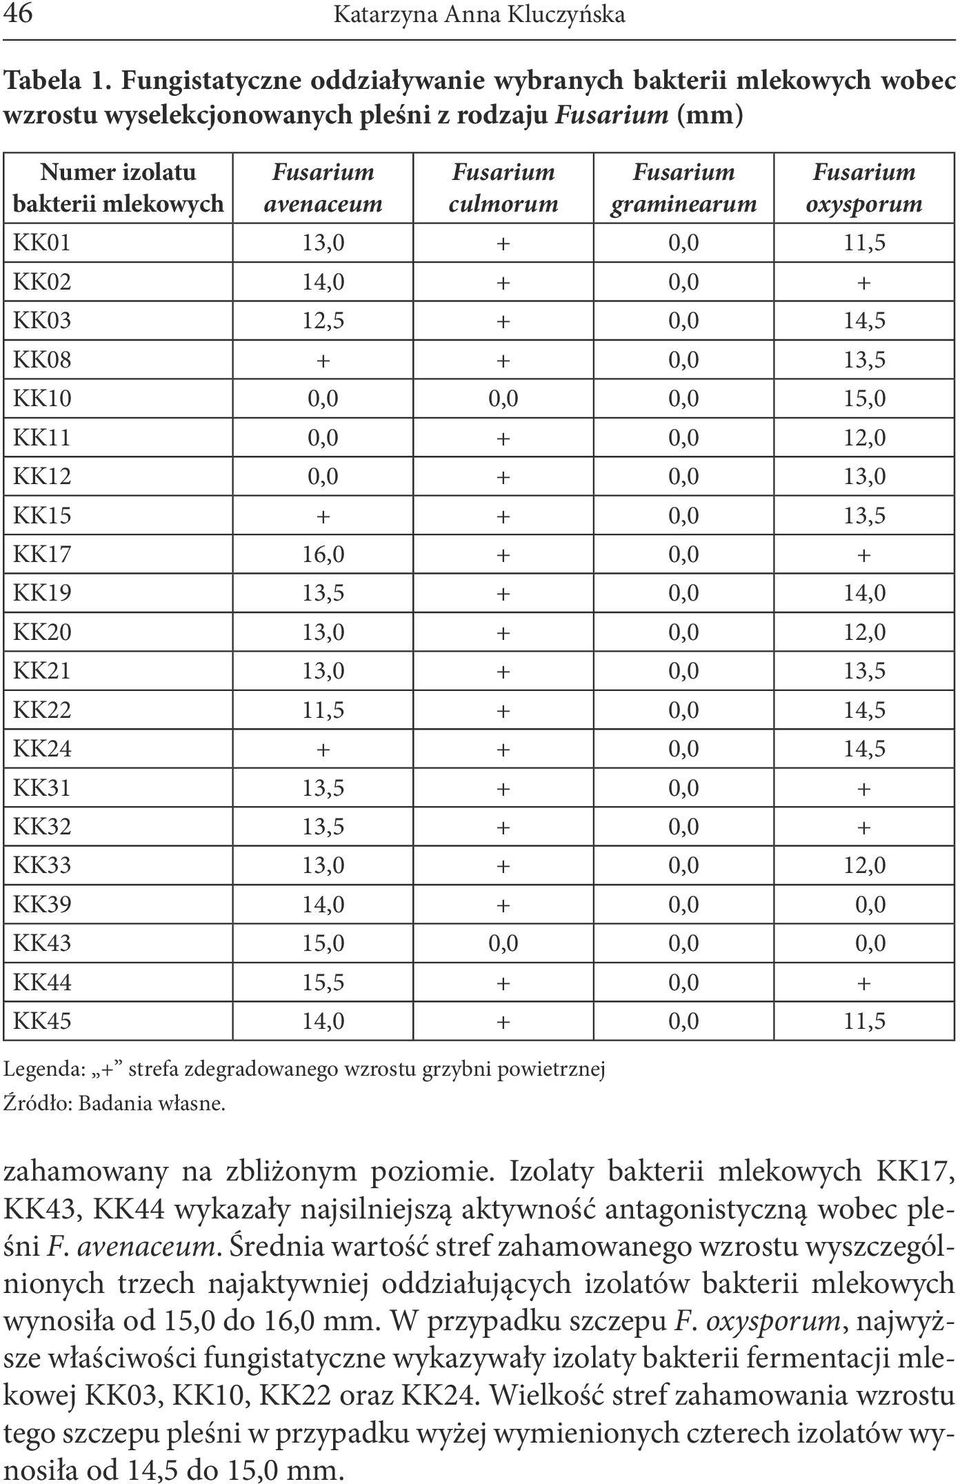 Fusarium graminearum Fusarium oxysporum KK01 13,0 + 0,0 11,5 KK02 14,0 + 0,0 + KK03 12,5 + 0,0 14,5 KK08 + + 0,0 13,5 KK10 0,0 0,0 0,0 15,0 KK11 0,0 + 0,0 12,0 KK12 0,0 + 0,0 13,0 KK15 + + 0,0 13,5